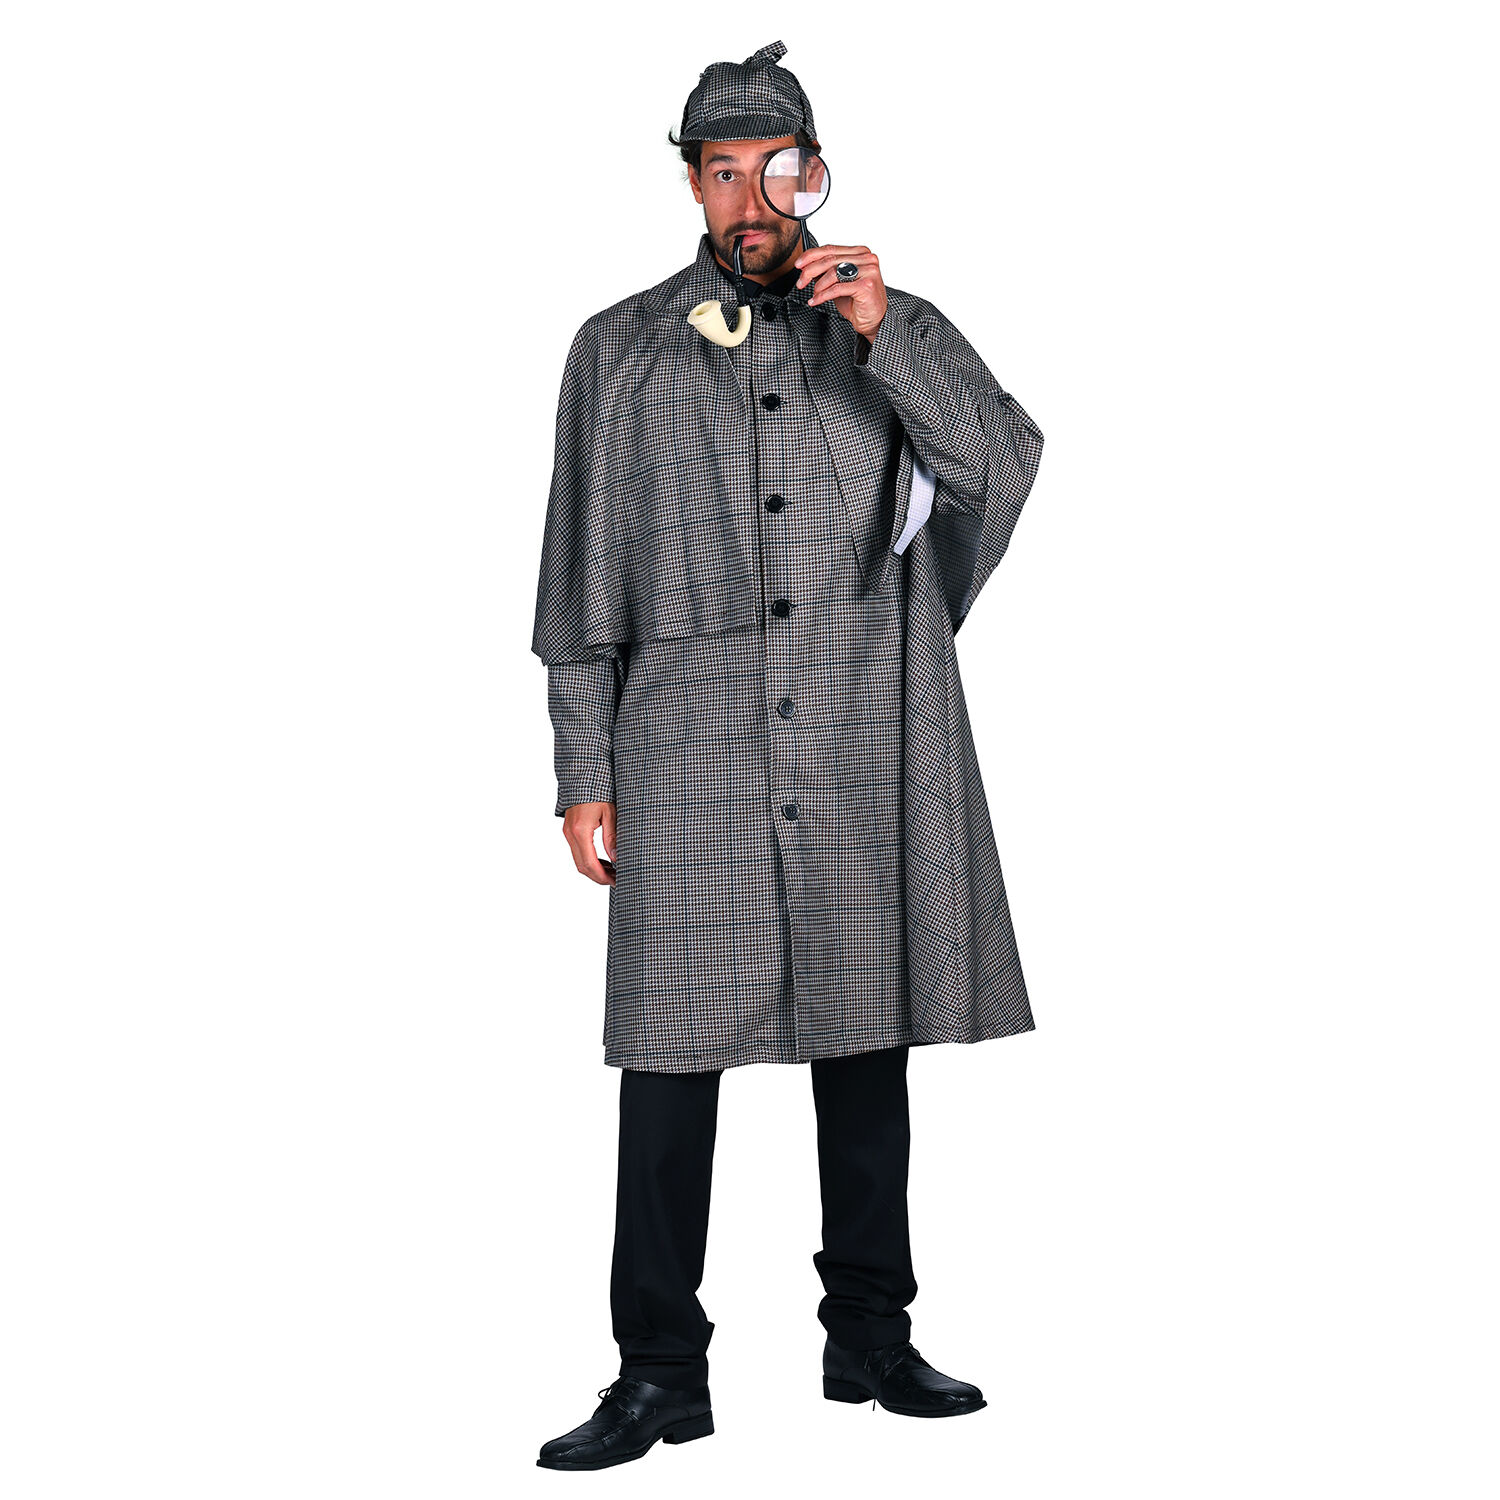 NEU Herren-Kostüm Sherlock Holmes, Detektiv-Mantel, Gr. S Bild 2